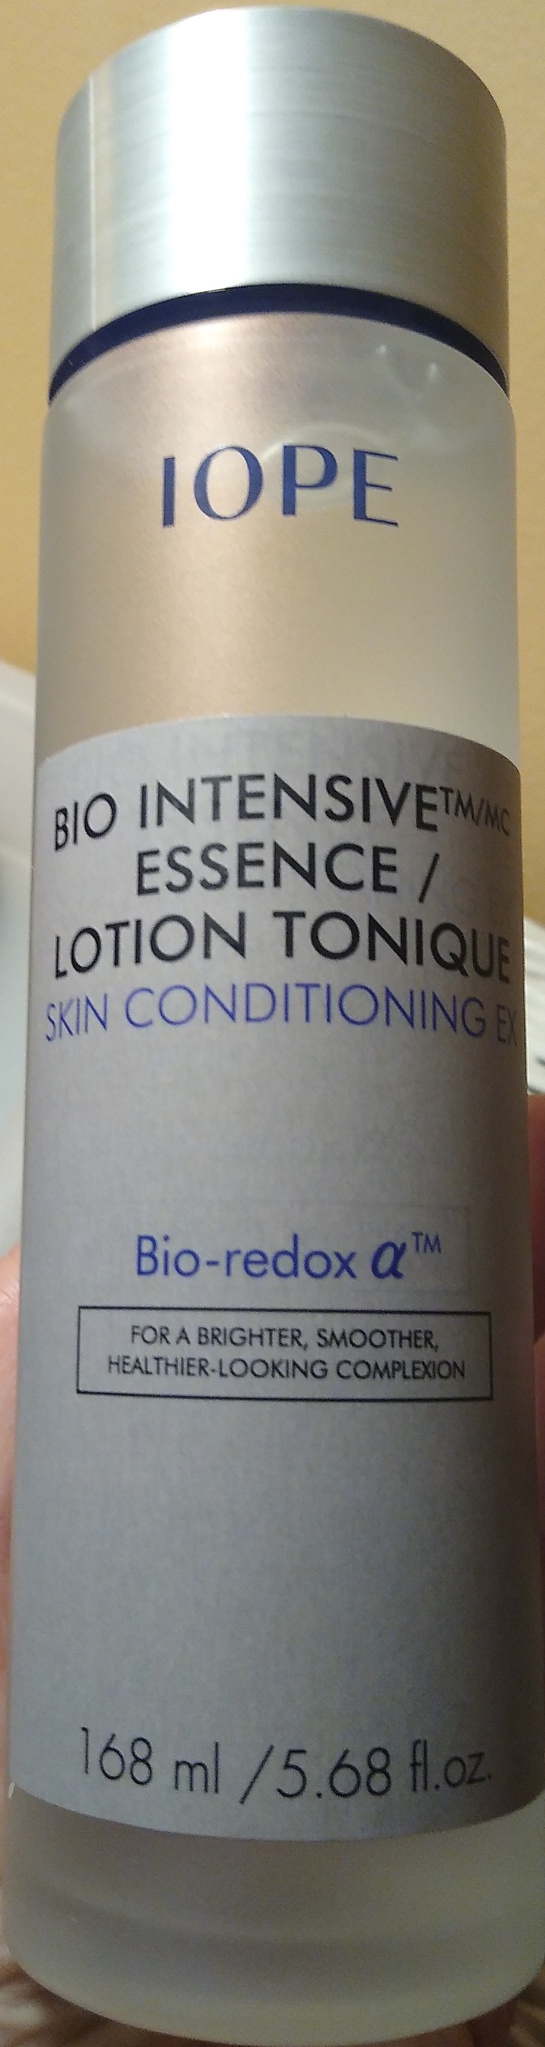 IOPE Bio Intensive Essence Skin Conditioning Ex